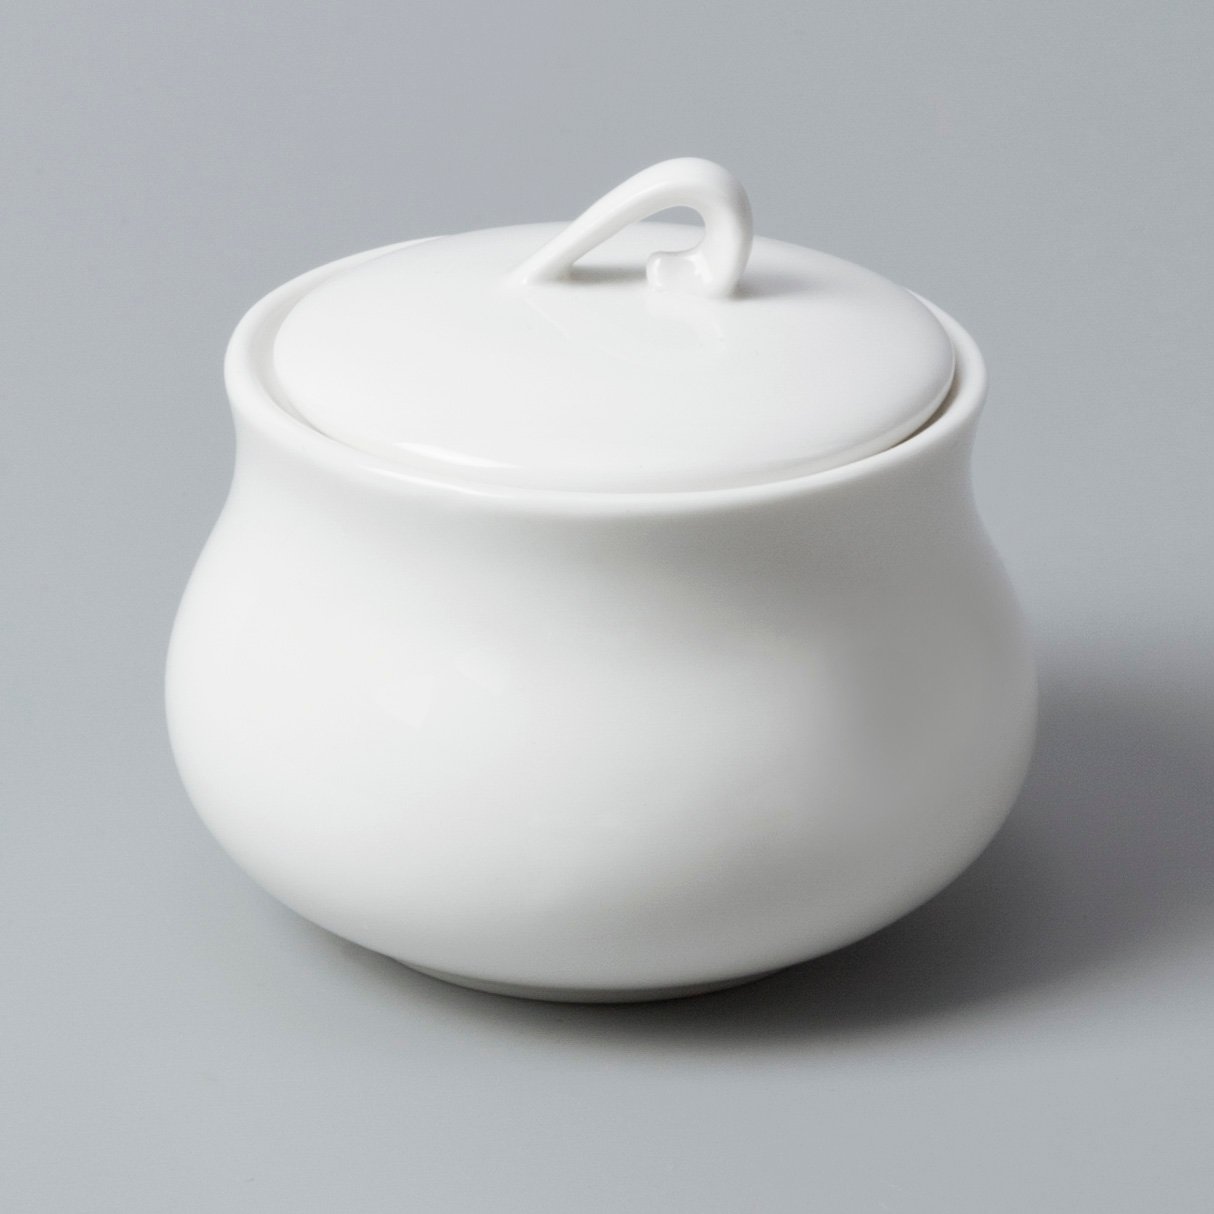 glaze best porcelain dinnerware in the world Italian style manufacturerfor home-10